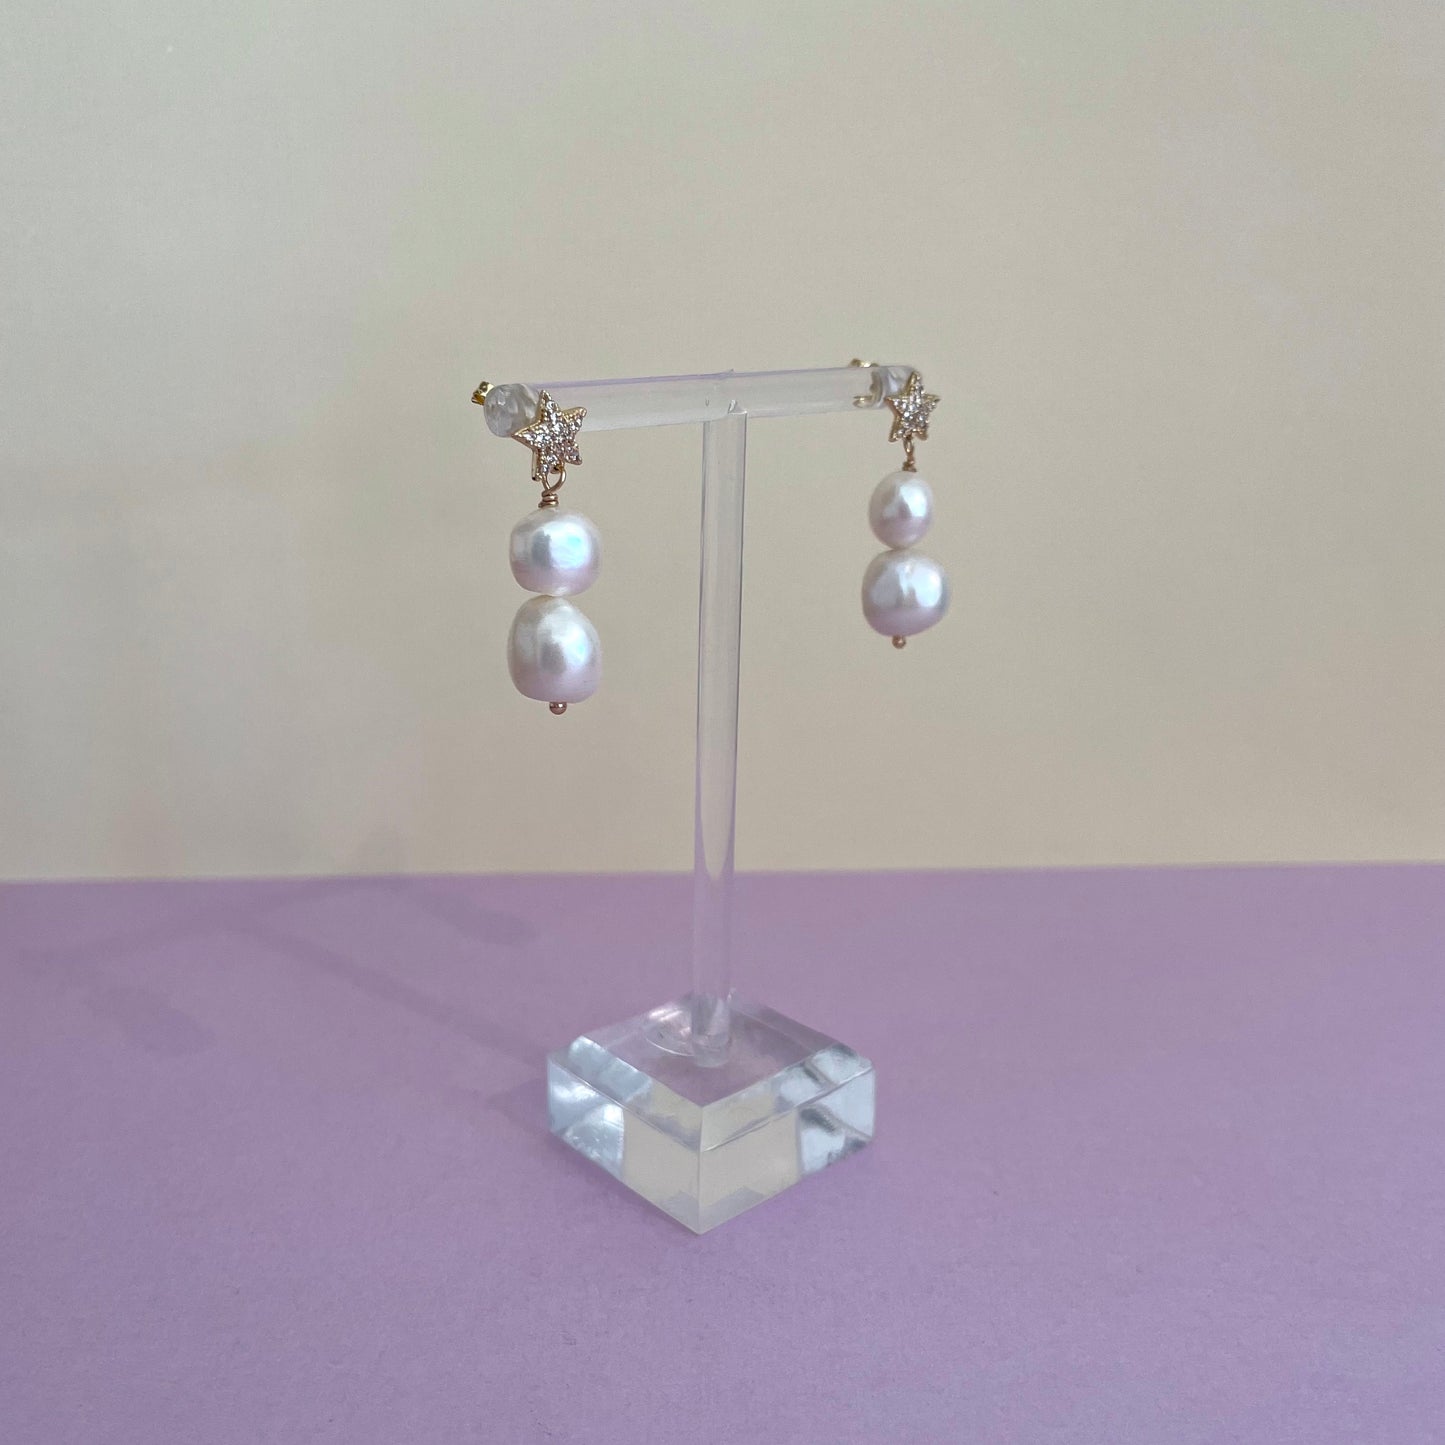 Hourglass Star Earrings